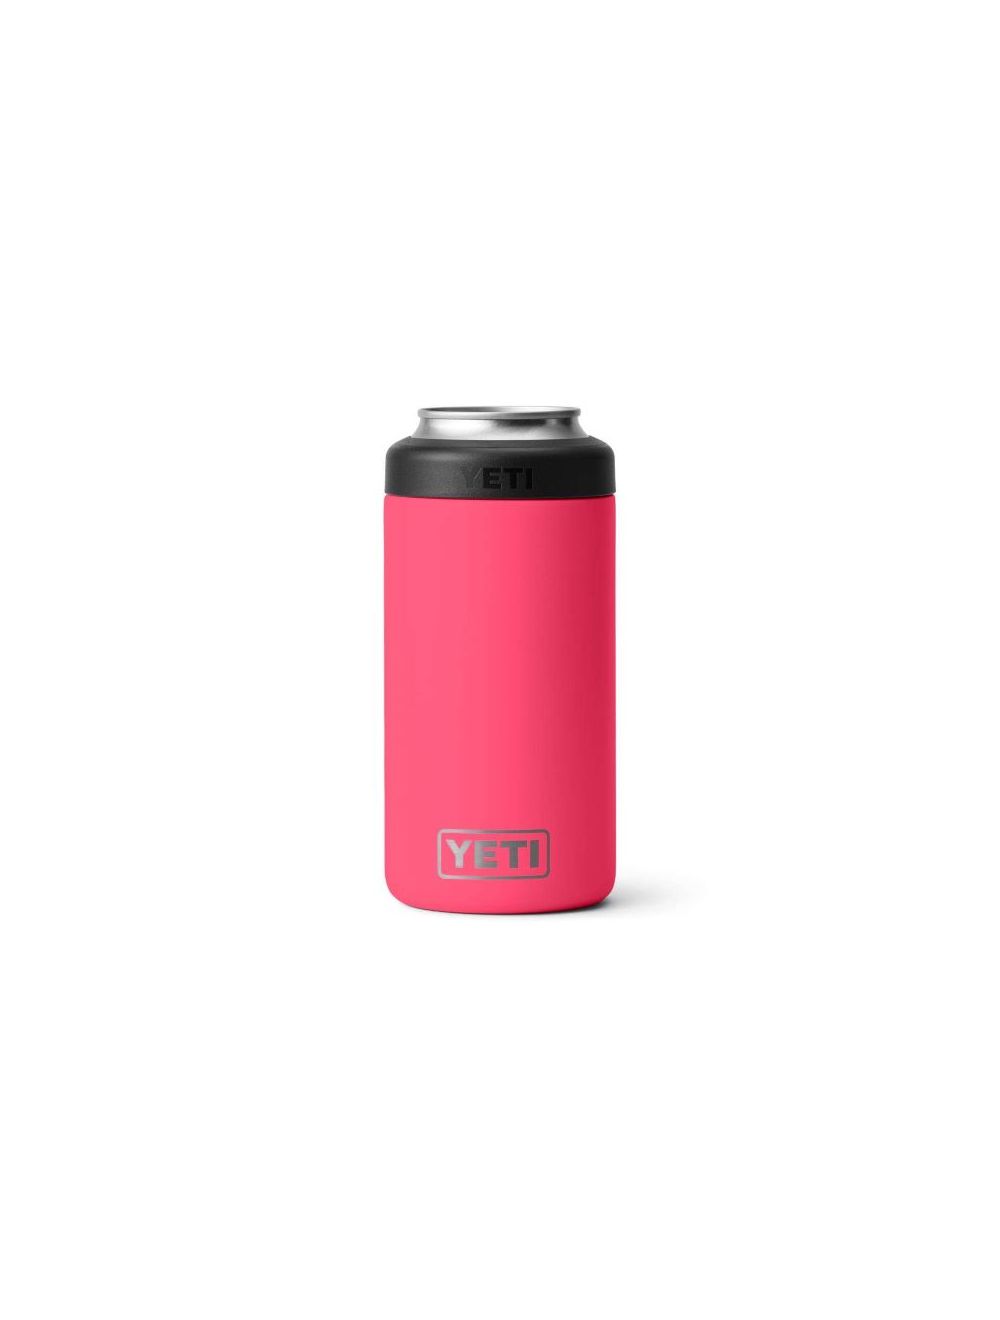 YETI / Rambler 16 oz Stackable Pint - Bimini Pink